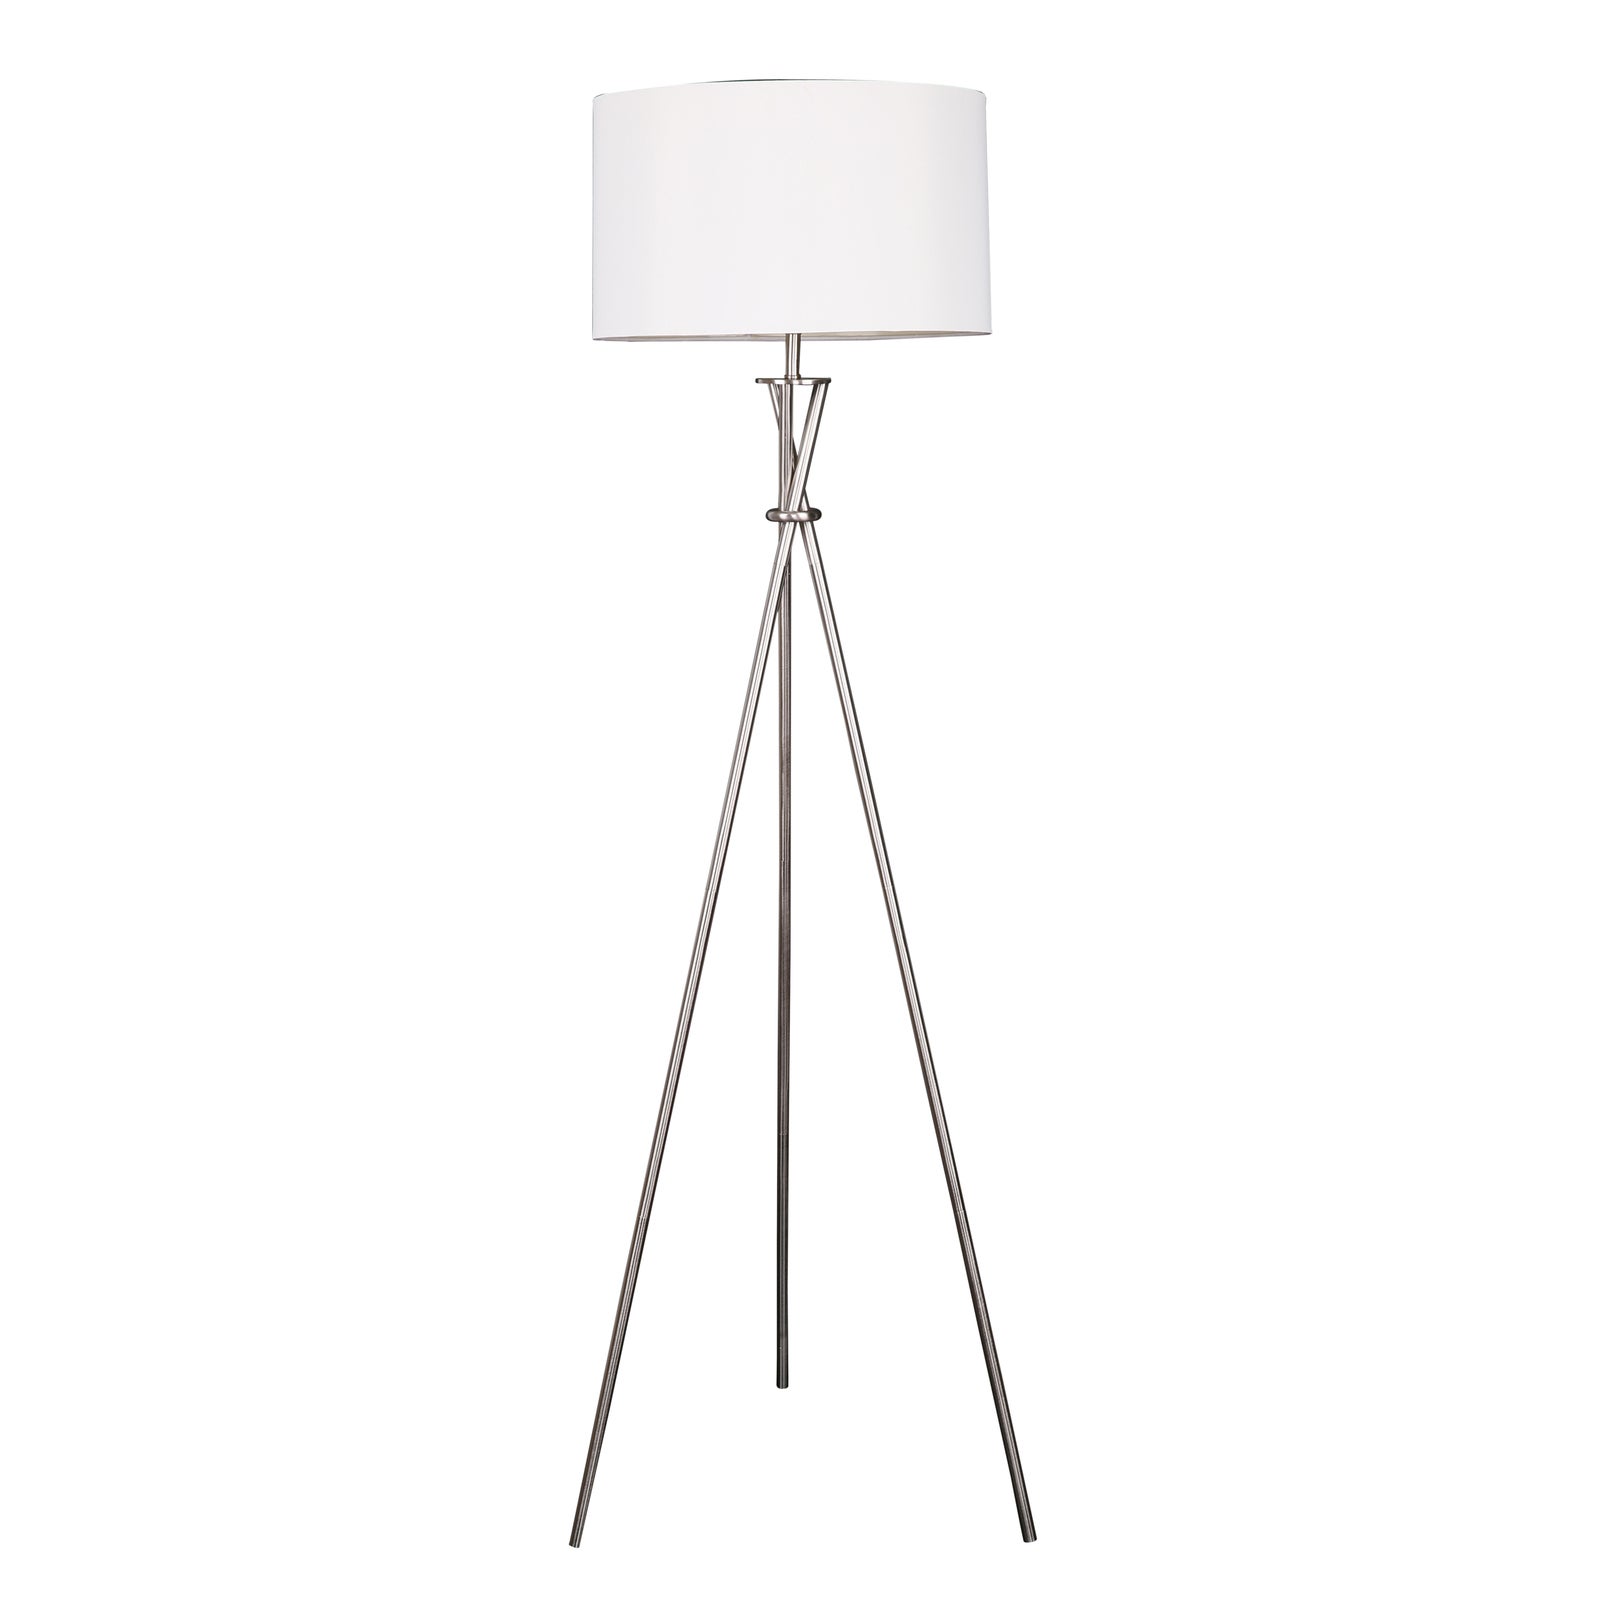 Sherwood Lighting Art Deco Tripod Floor Lamp White - Polished Stainless Steel & White